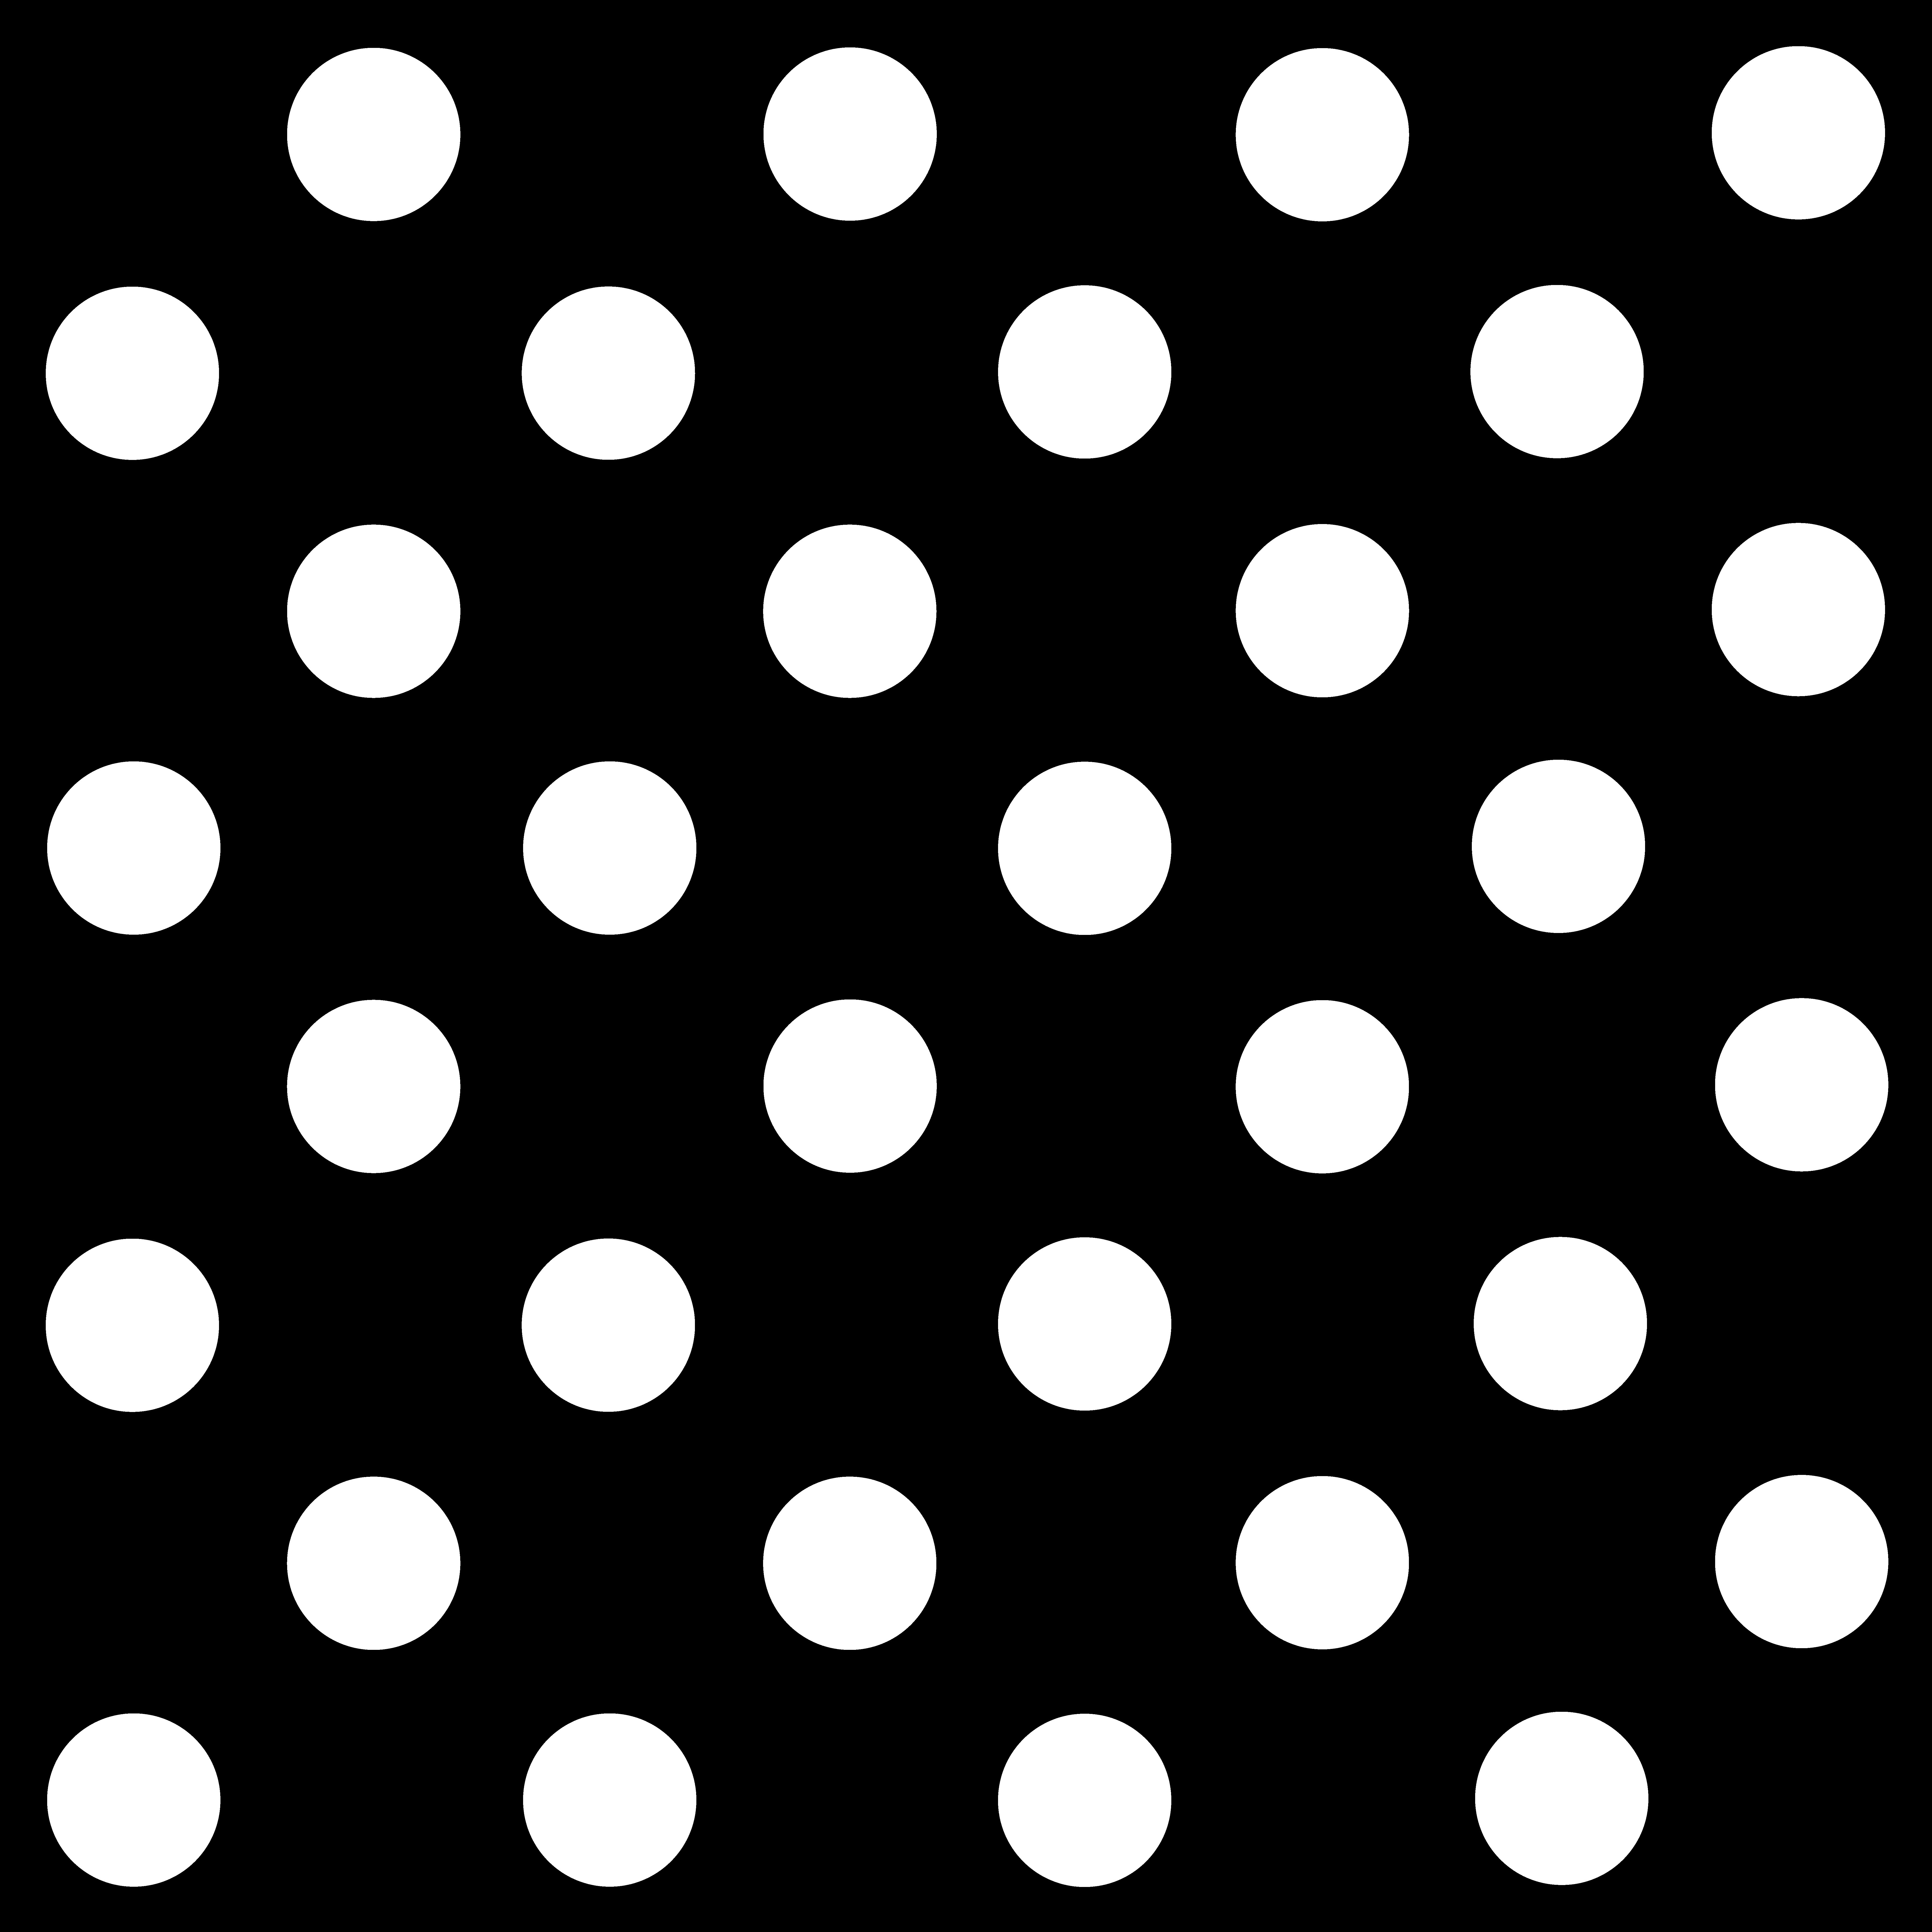 Black and white polka dot wallpaper